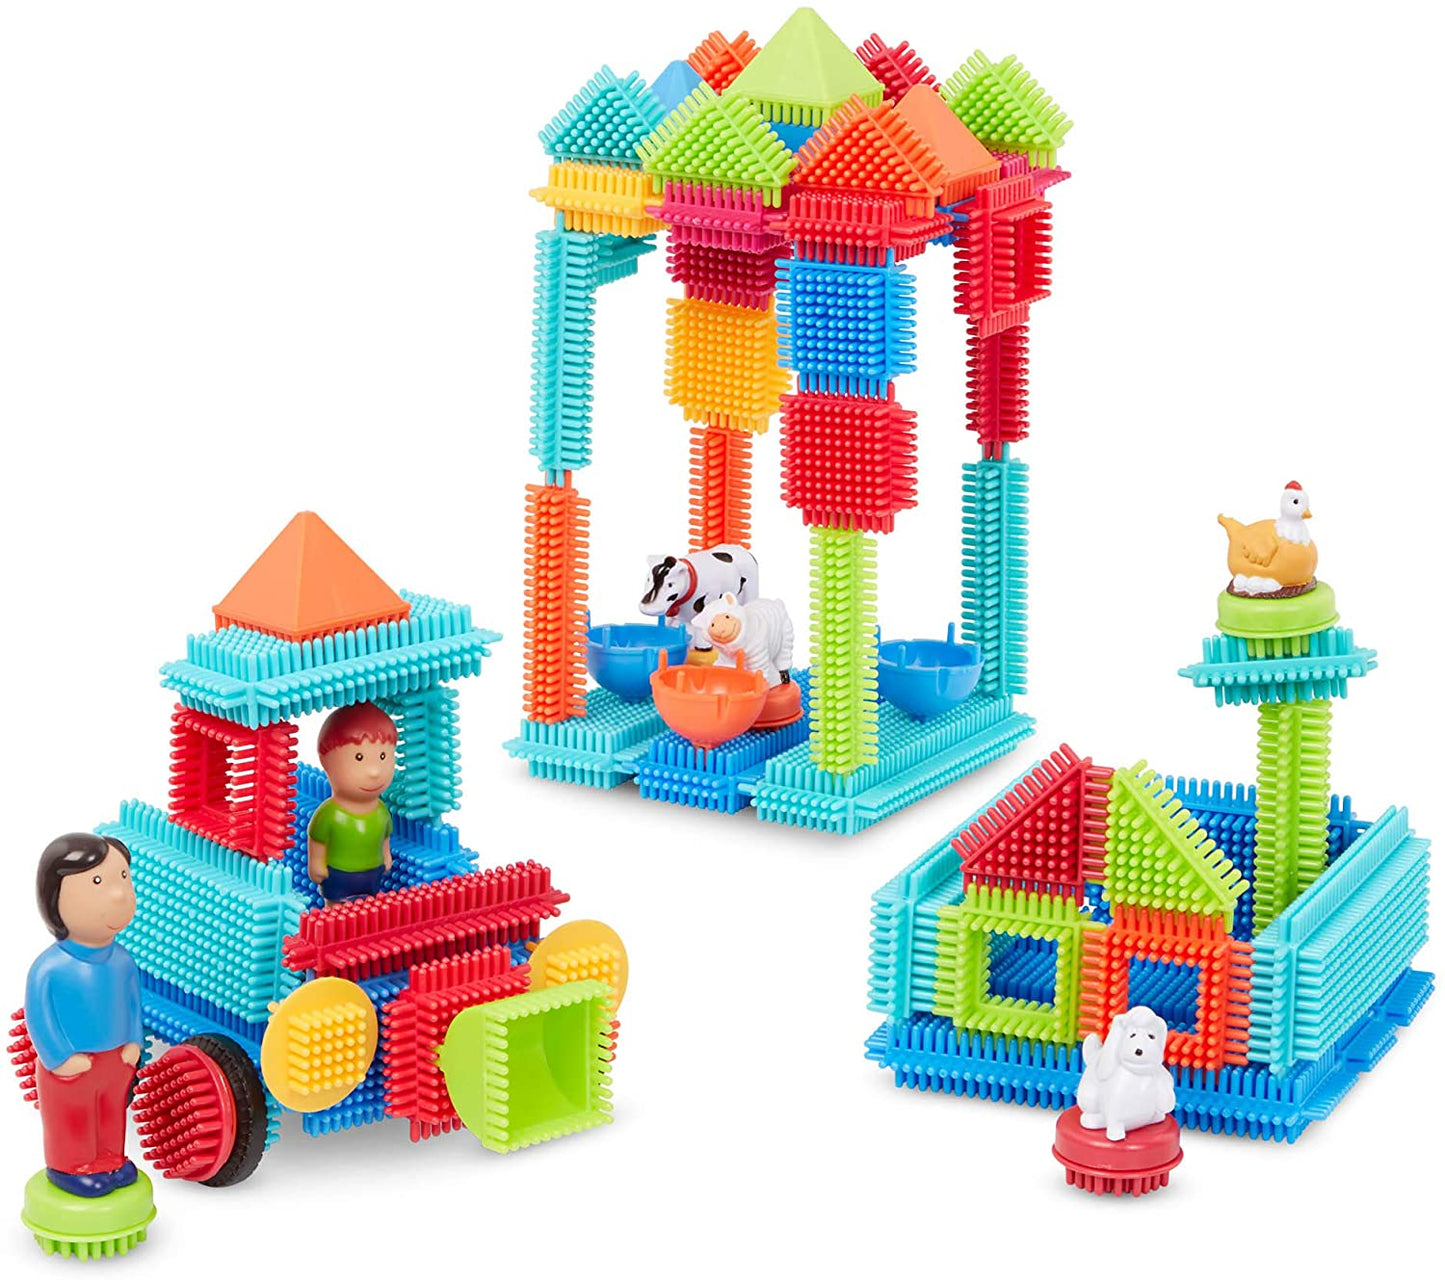 [Bristle Blocks by Battat] 85Pcs Blocks Big Value Case | STEM Creativity Building Toys